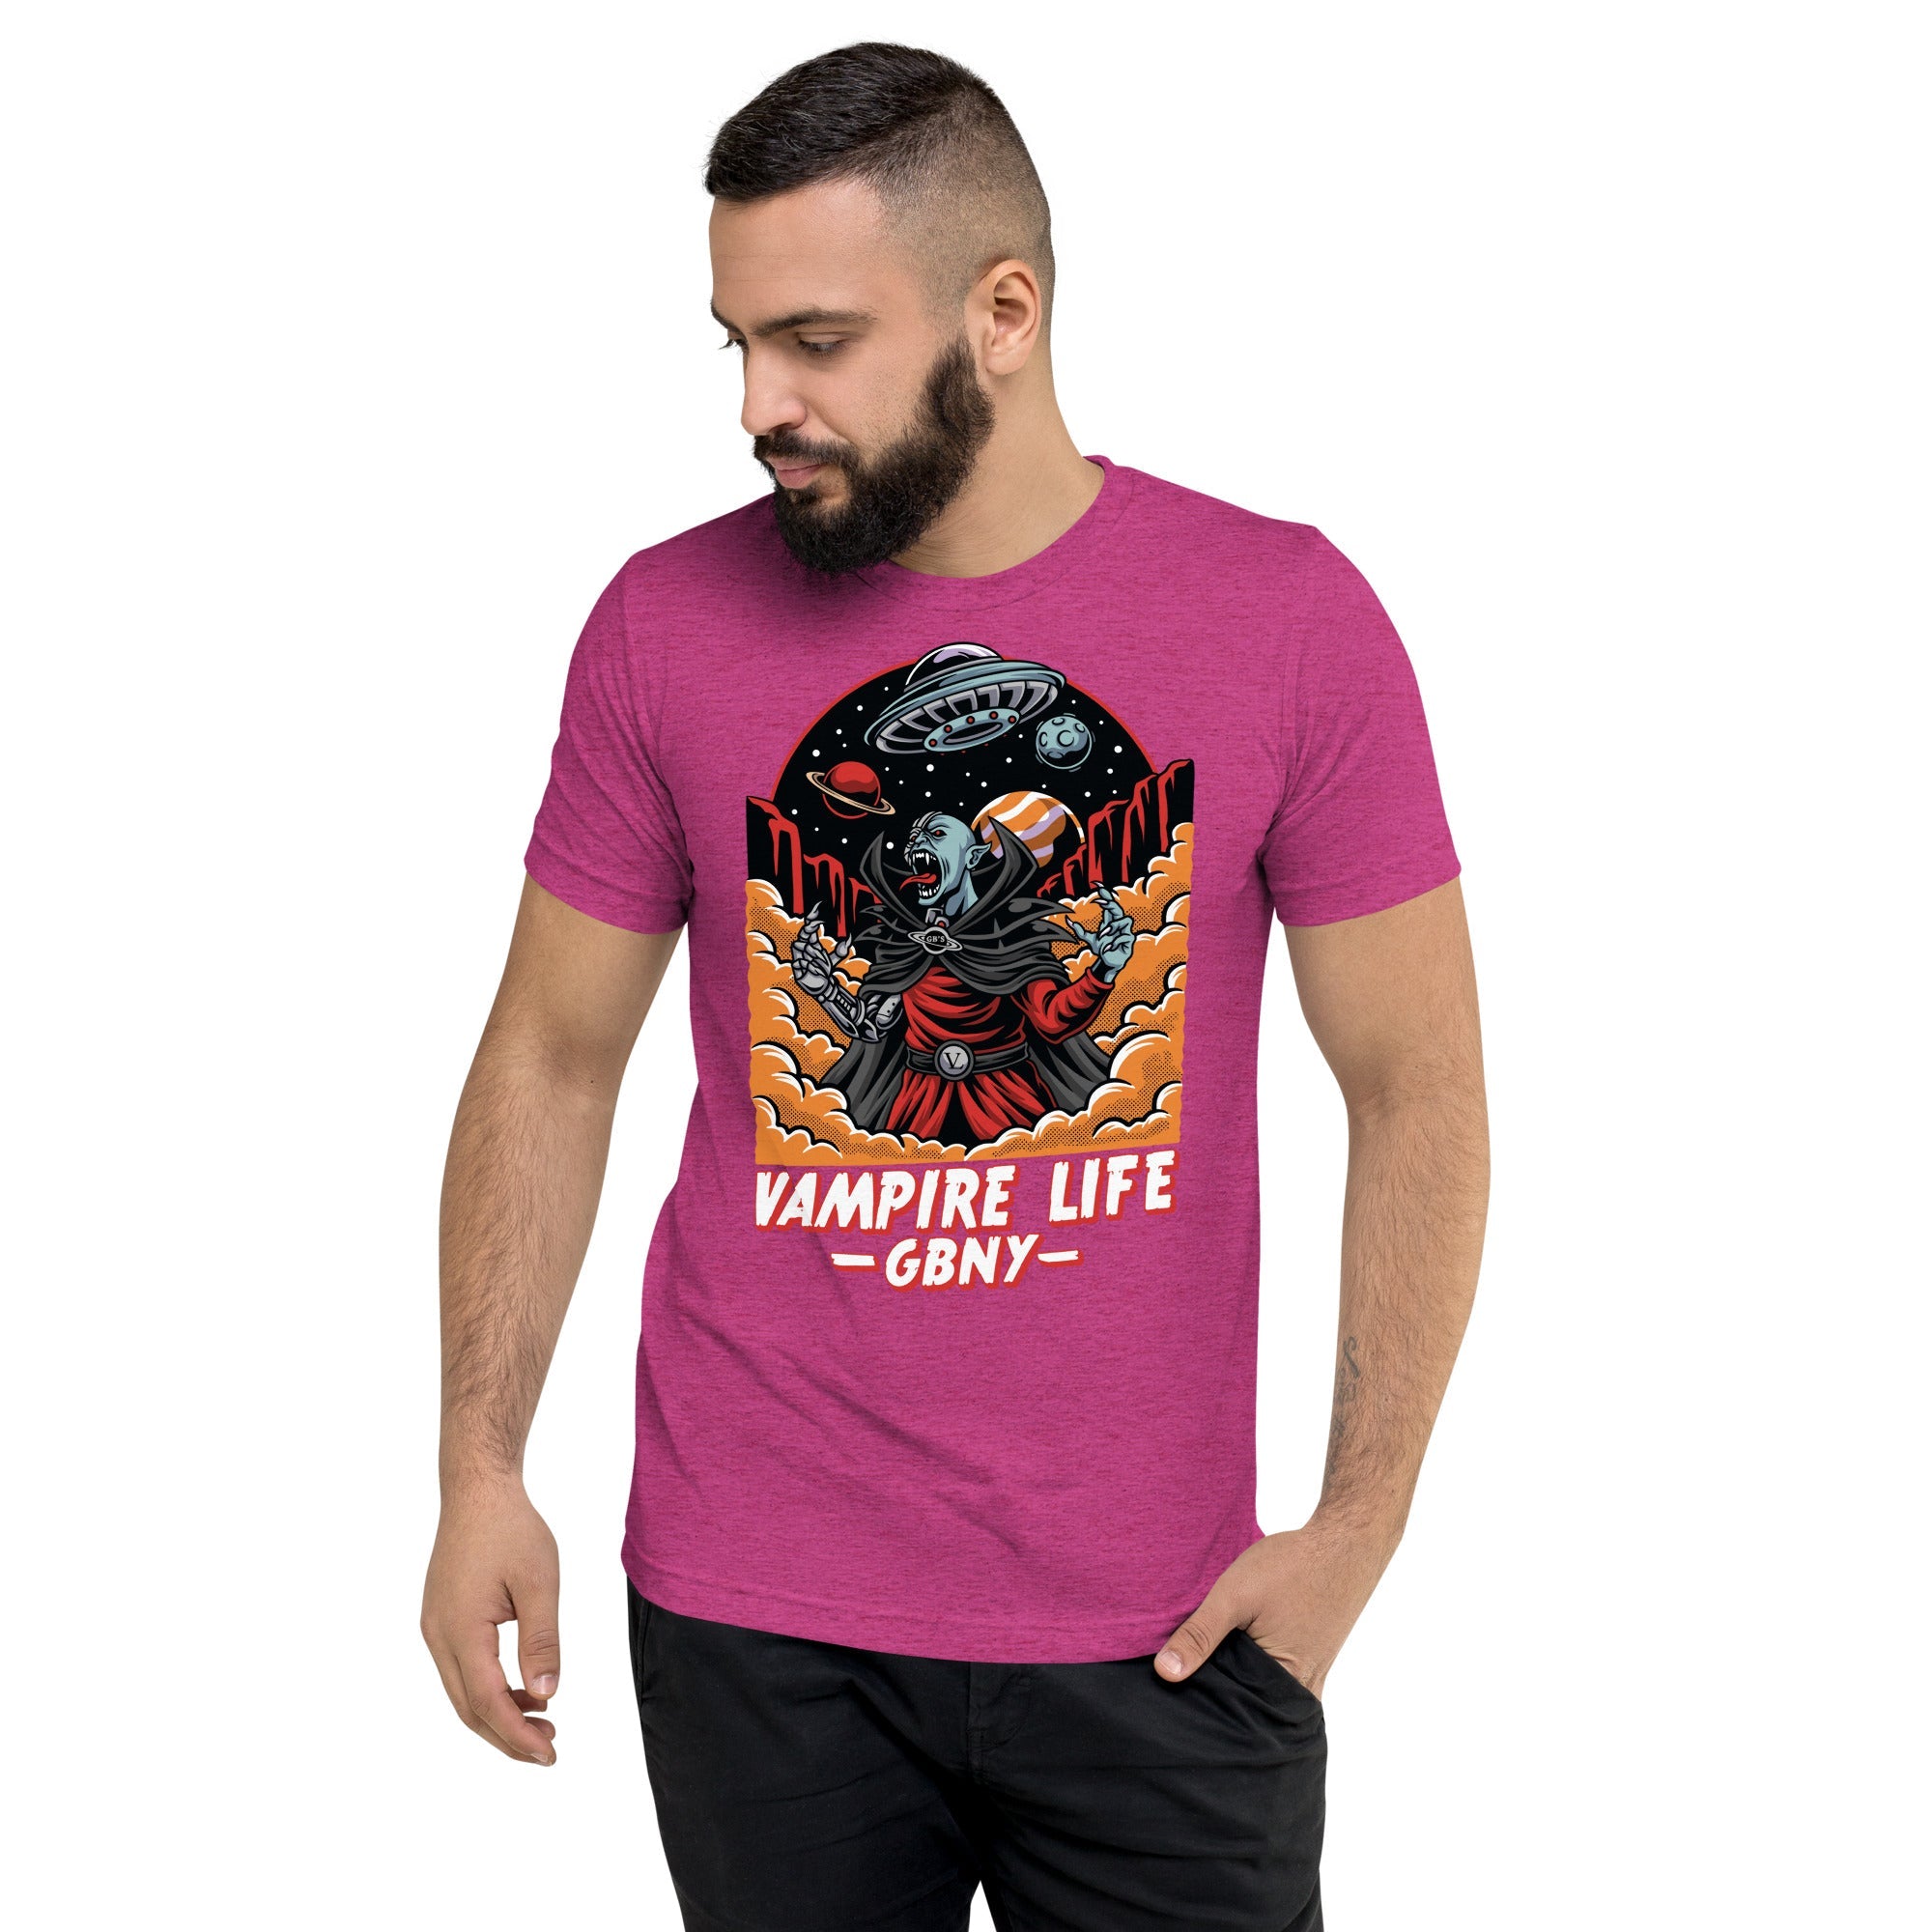 GBNY Berry Triblend / XS Vamp Life X GBNY "Space Vampire" T-shirt - Men's 3872353_6480